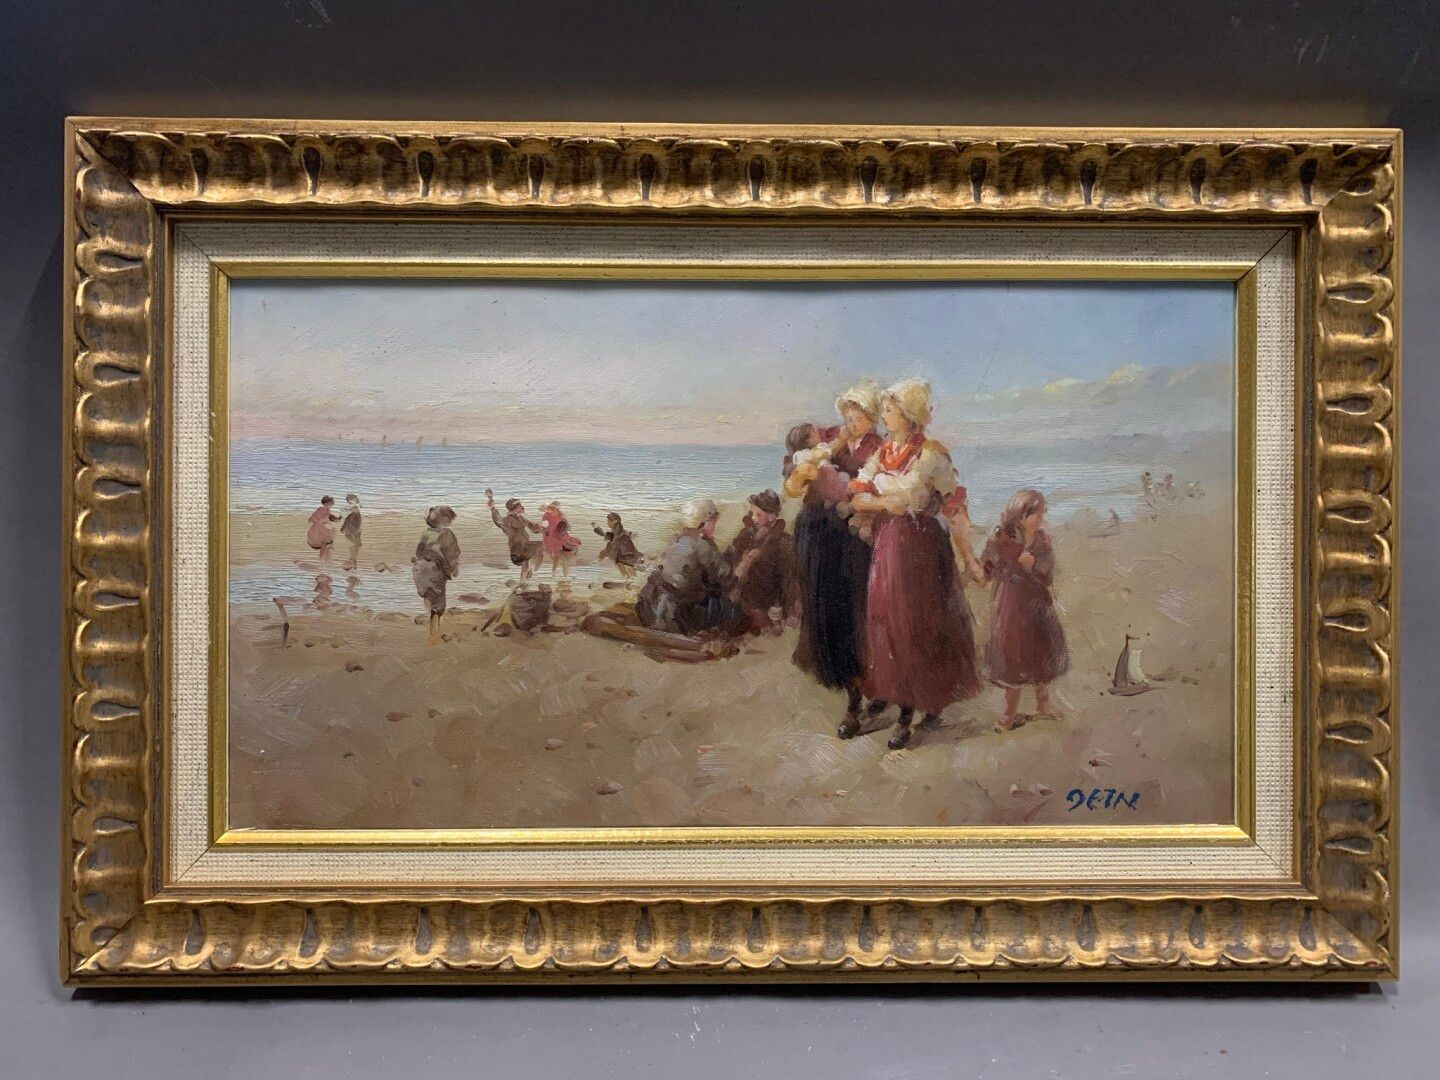 Null 现代学校，符合19世纪的口味

海滩上的渔民妇女和儿童

布面油画，署名DEIN。

H.22 - 长41厘米